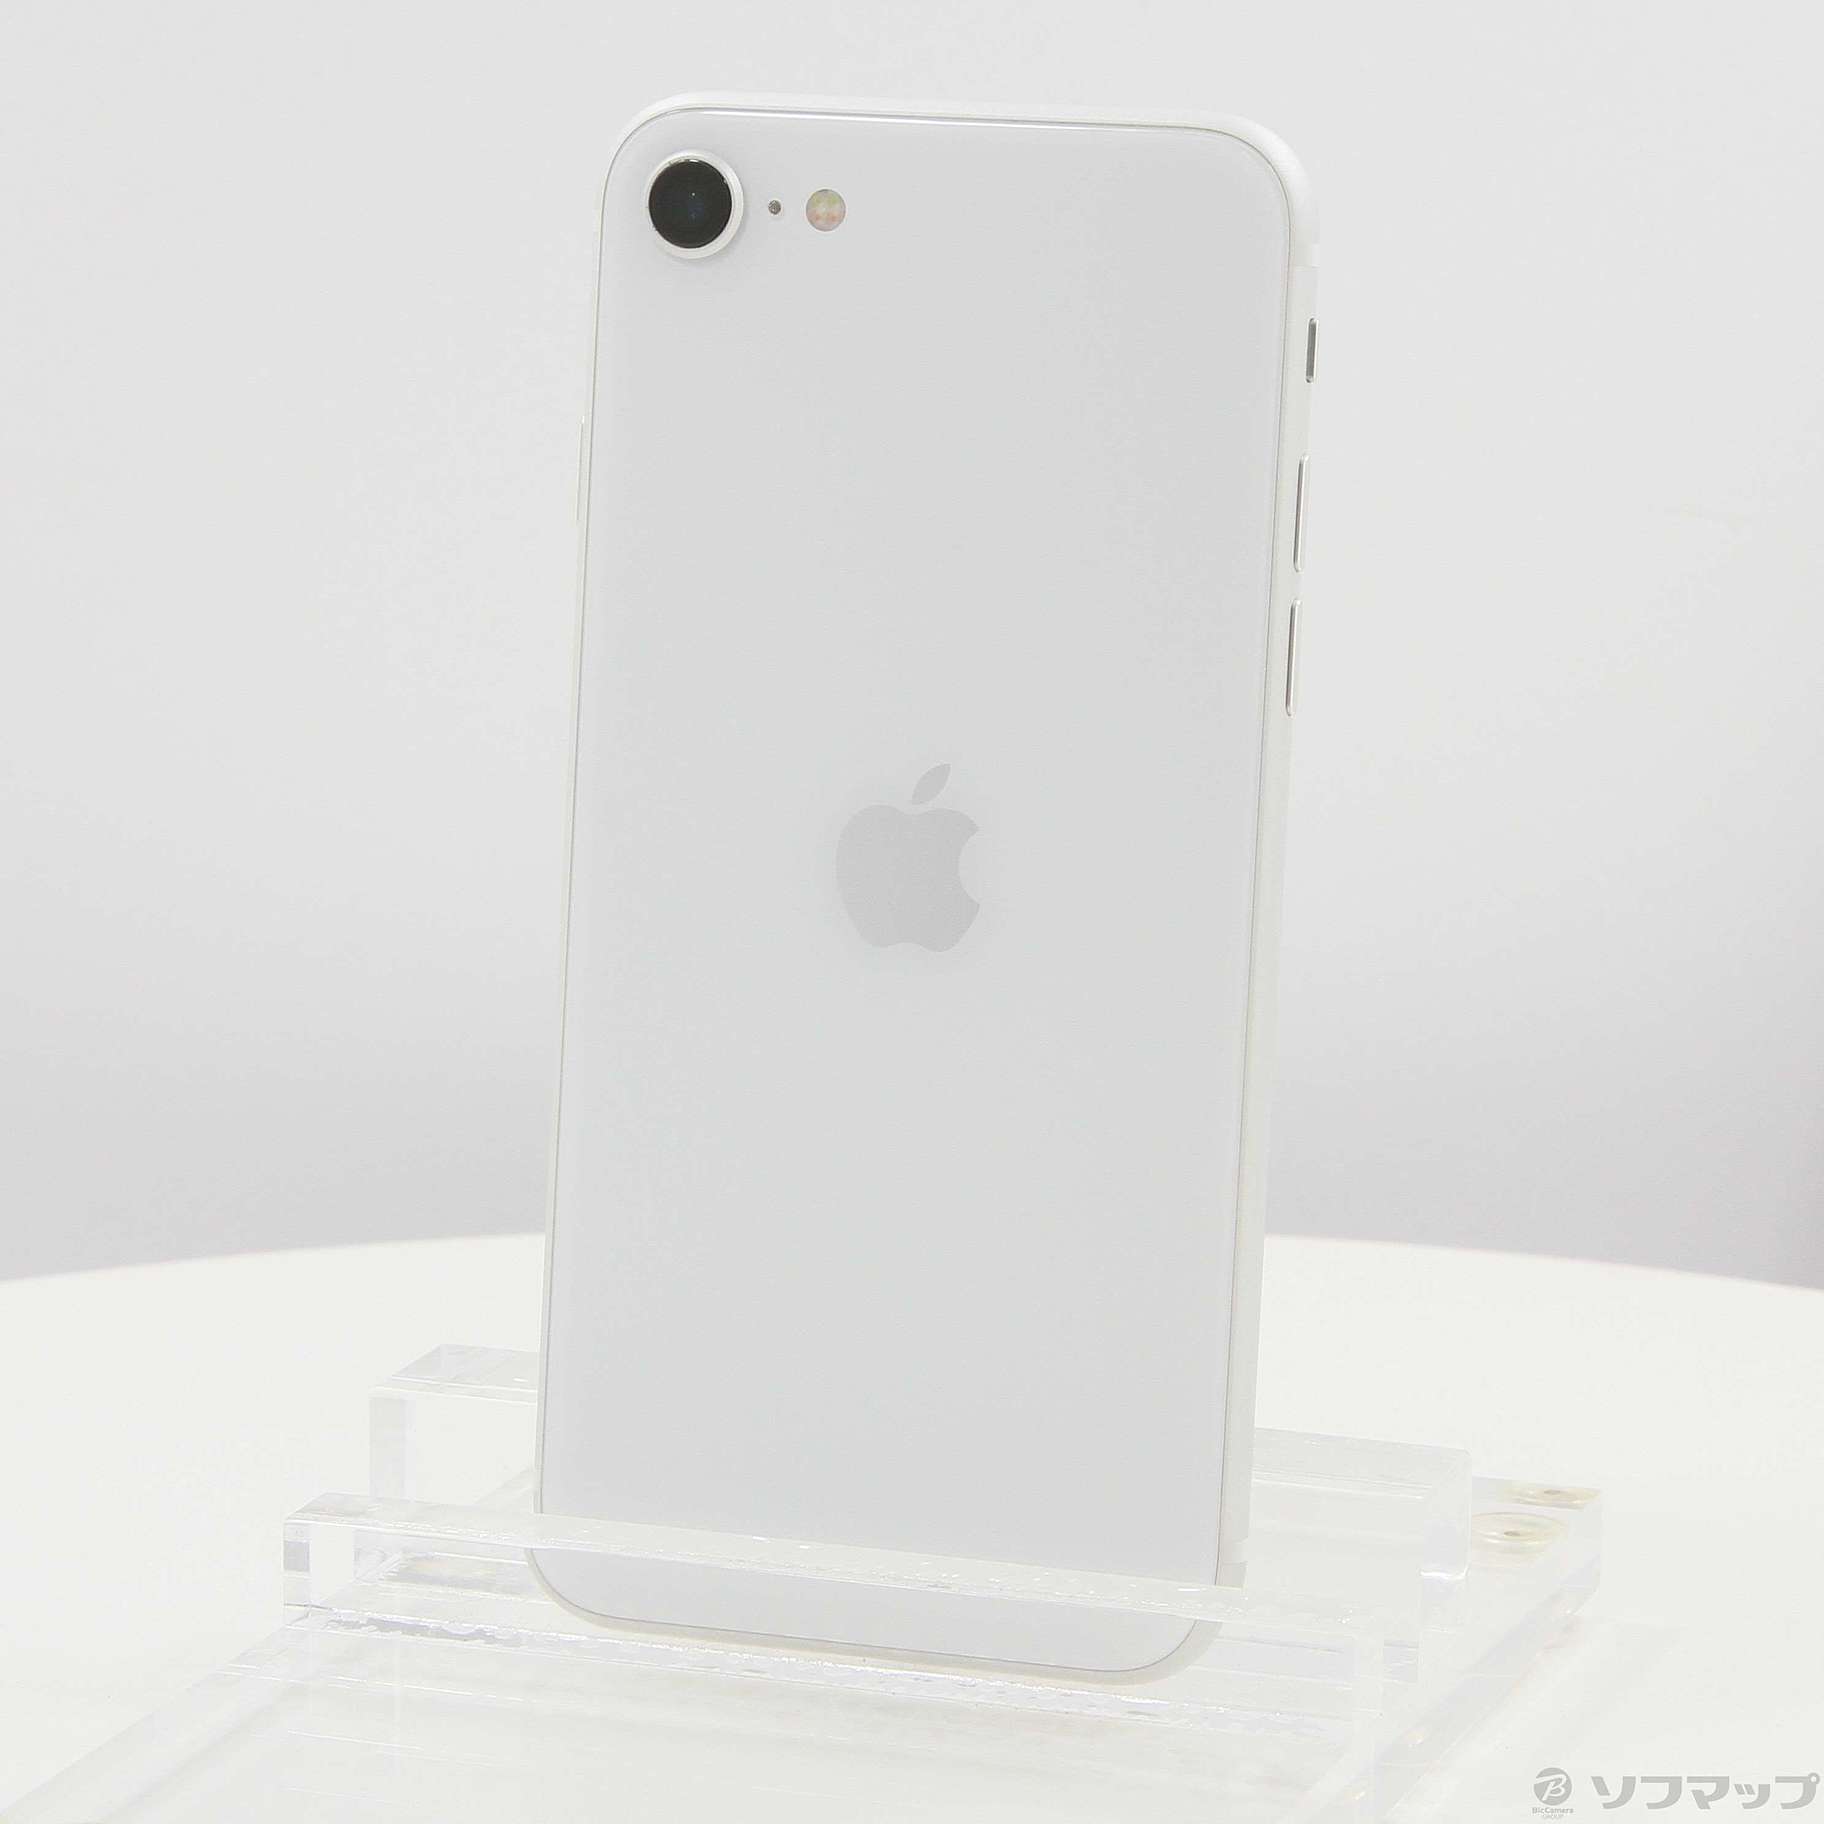 Apple iPhone SE 64GB 第2世代 ホワイト MHGQ3J/A - www.sorbillomenu.com